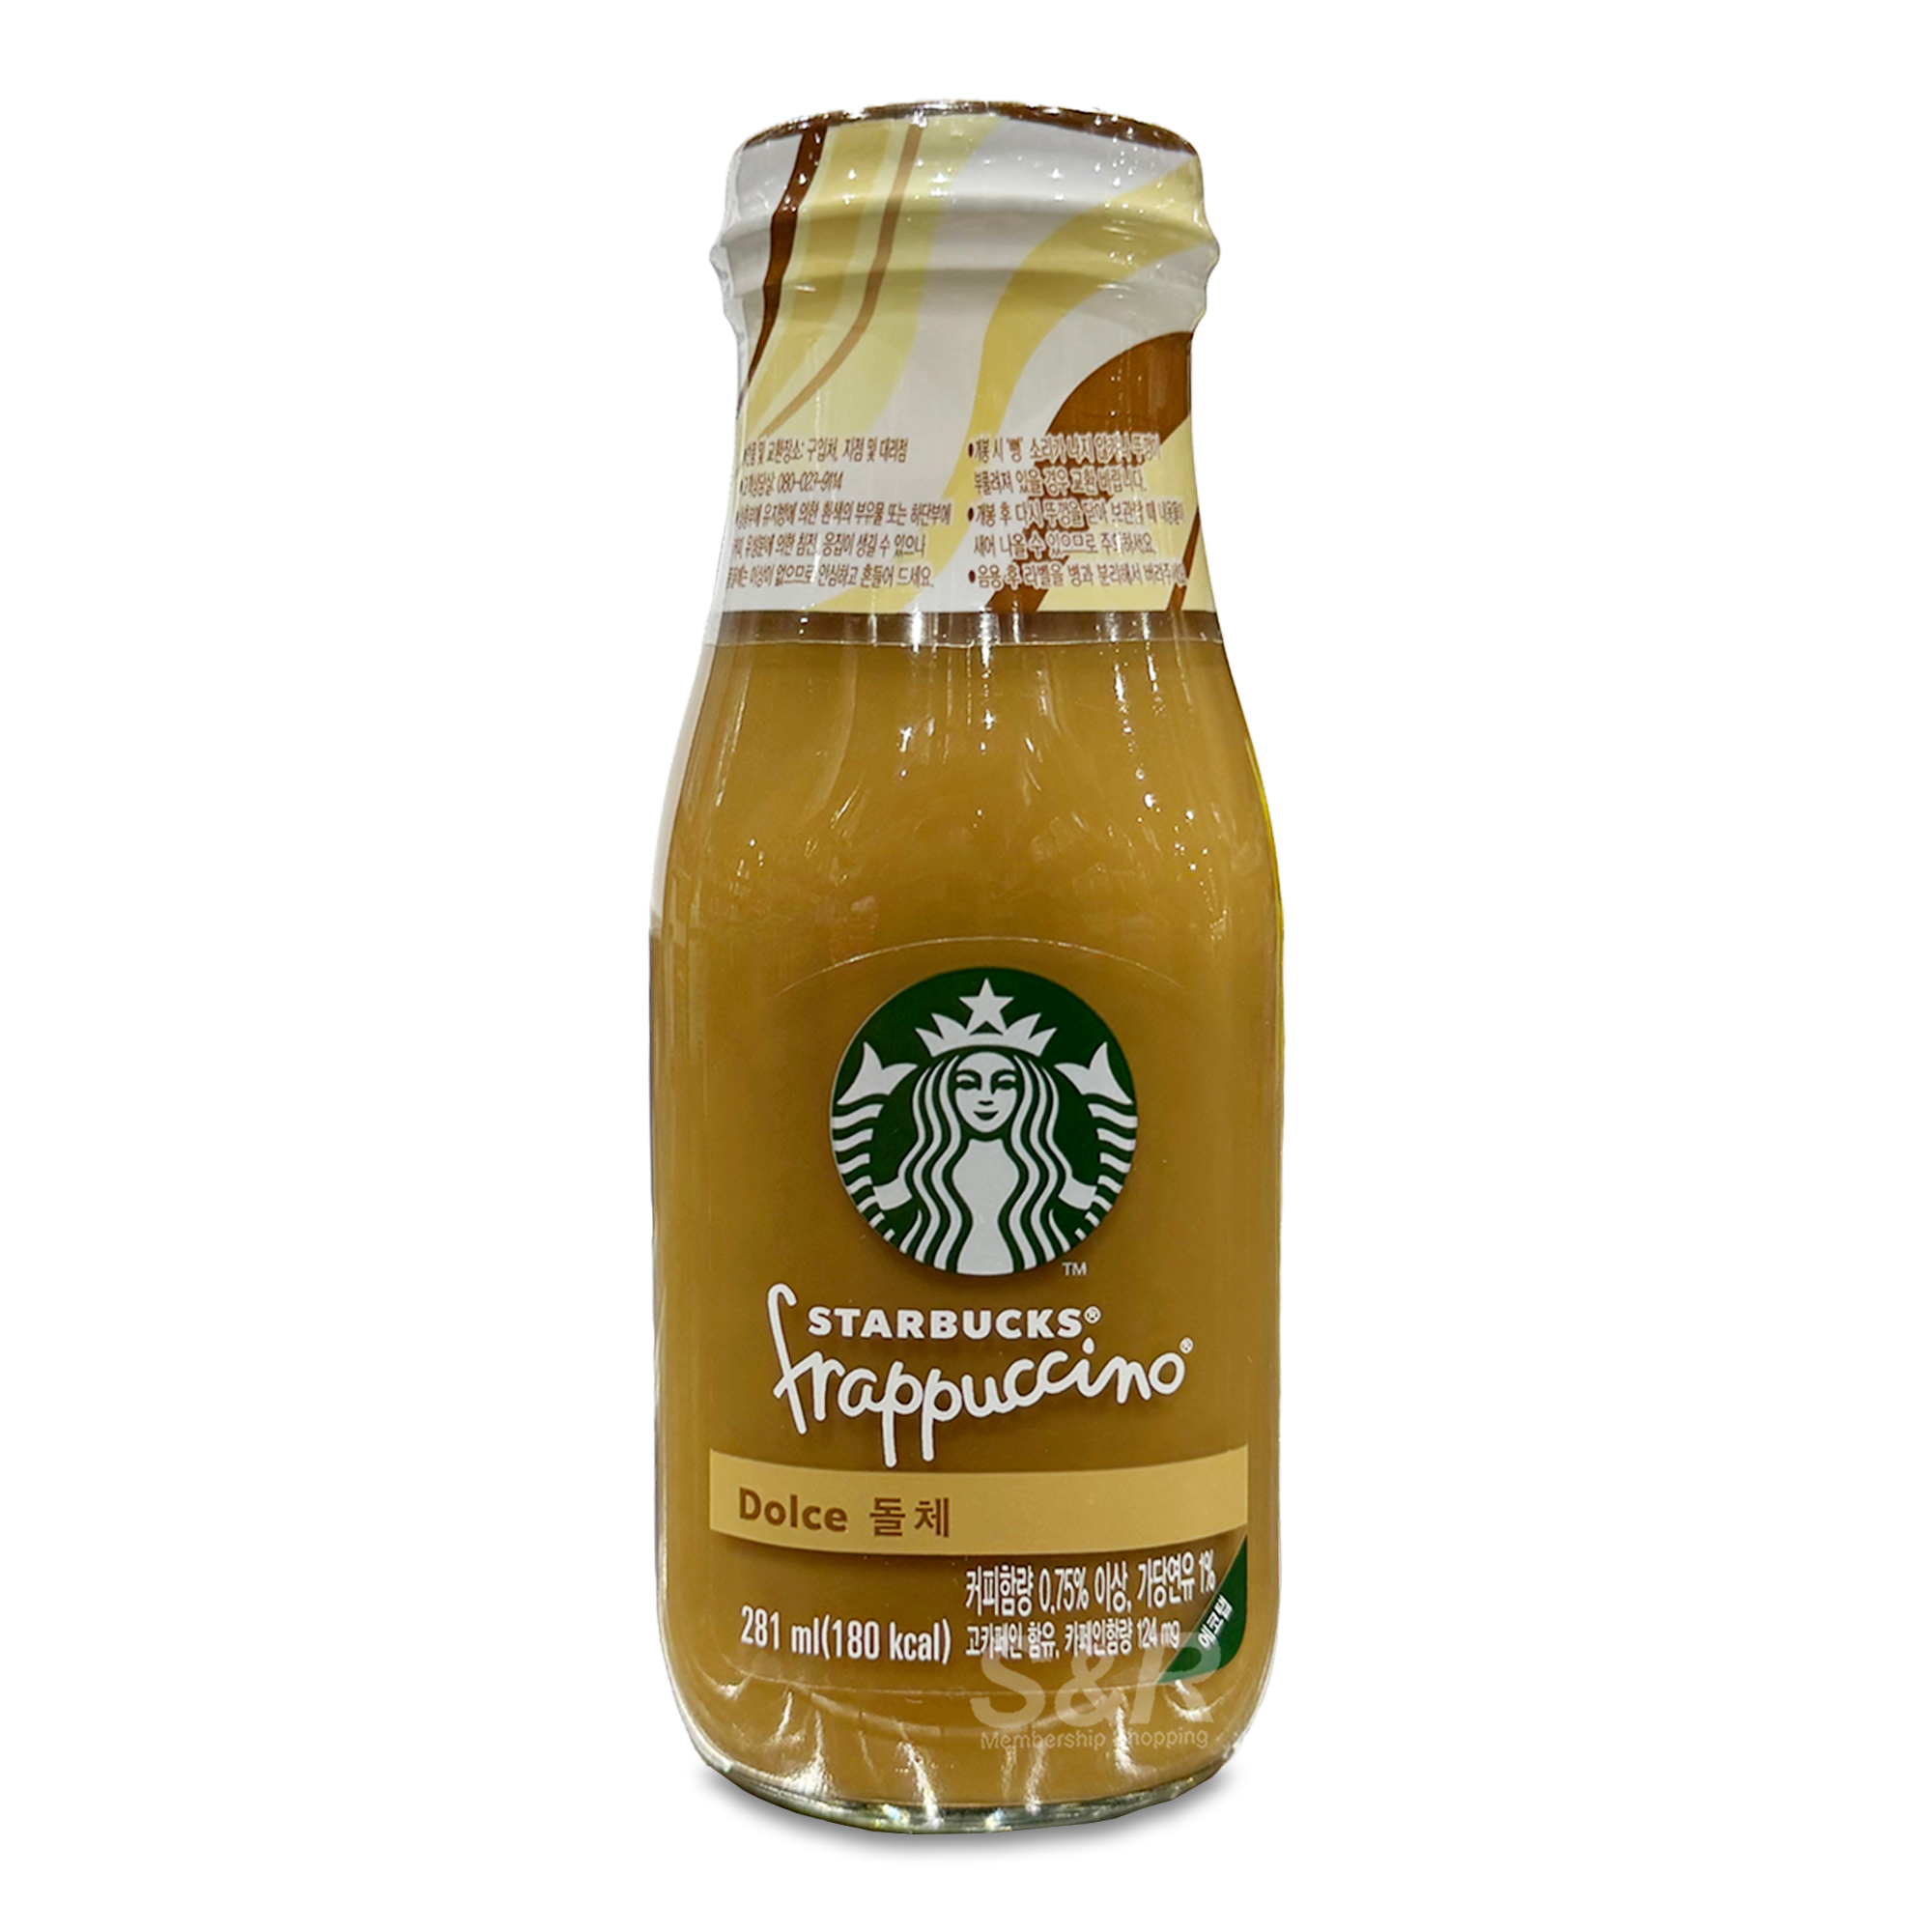 Starbucks Frappuccino Dolce 281mL